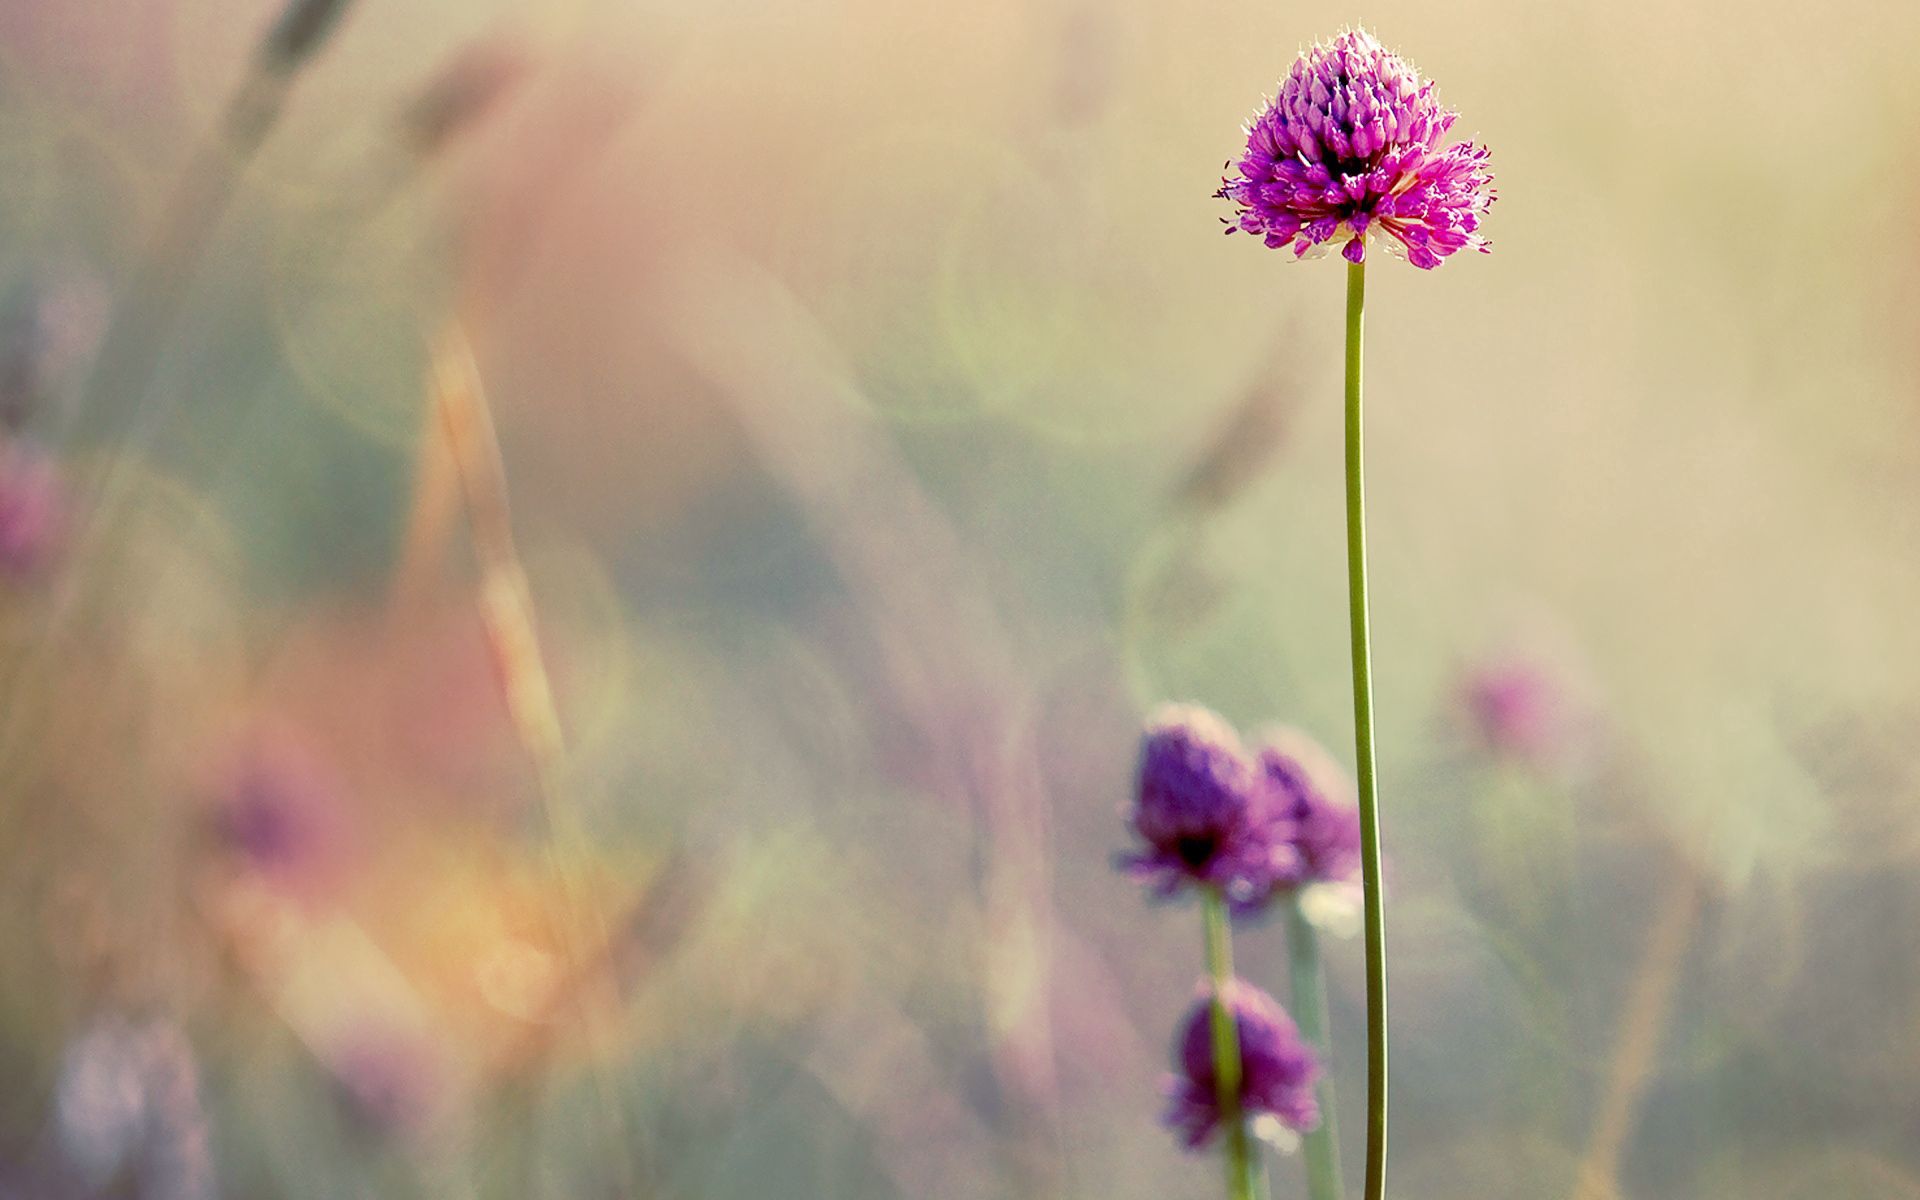 flowers, clover, stem, blur home screen for smartphone